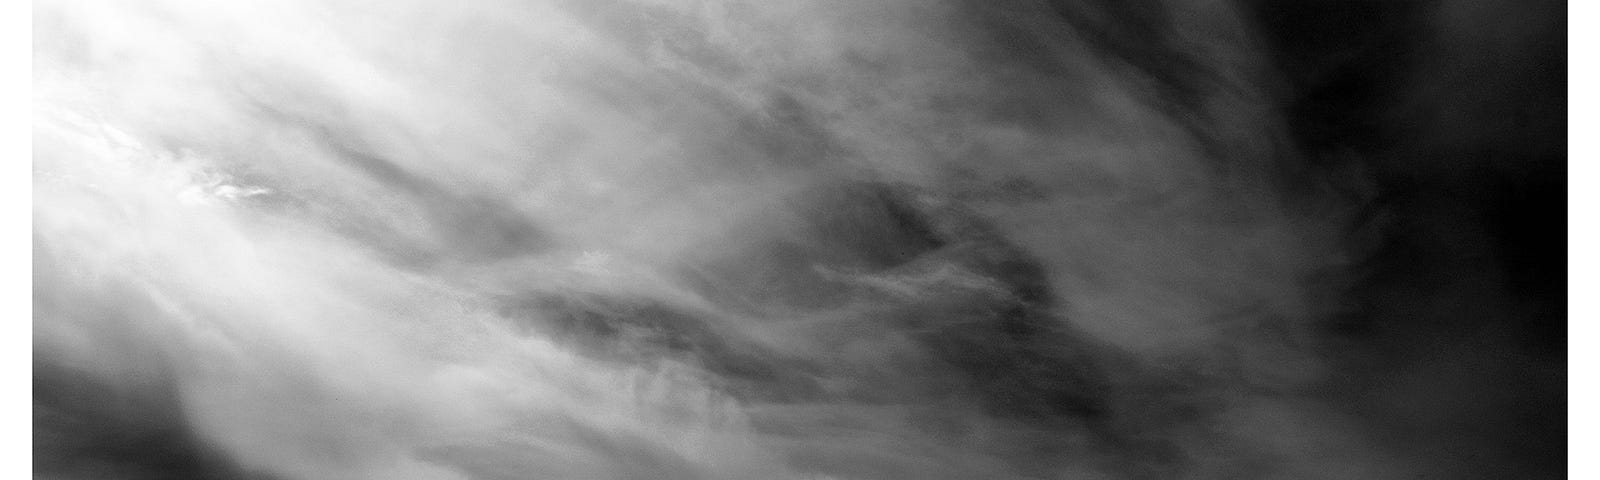 Titre Photographie contemporaine (4)
 Fine Art Cloud Photographer
 Photographie contemporaine de nuages par l’artiste visuel contemporain Photographe d’art Robert Ireland